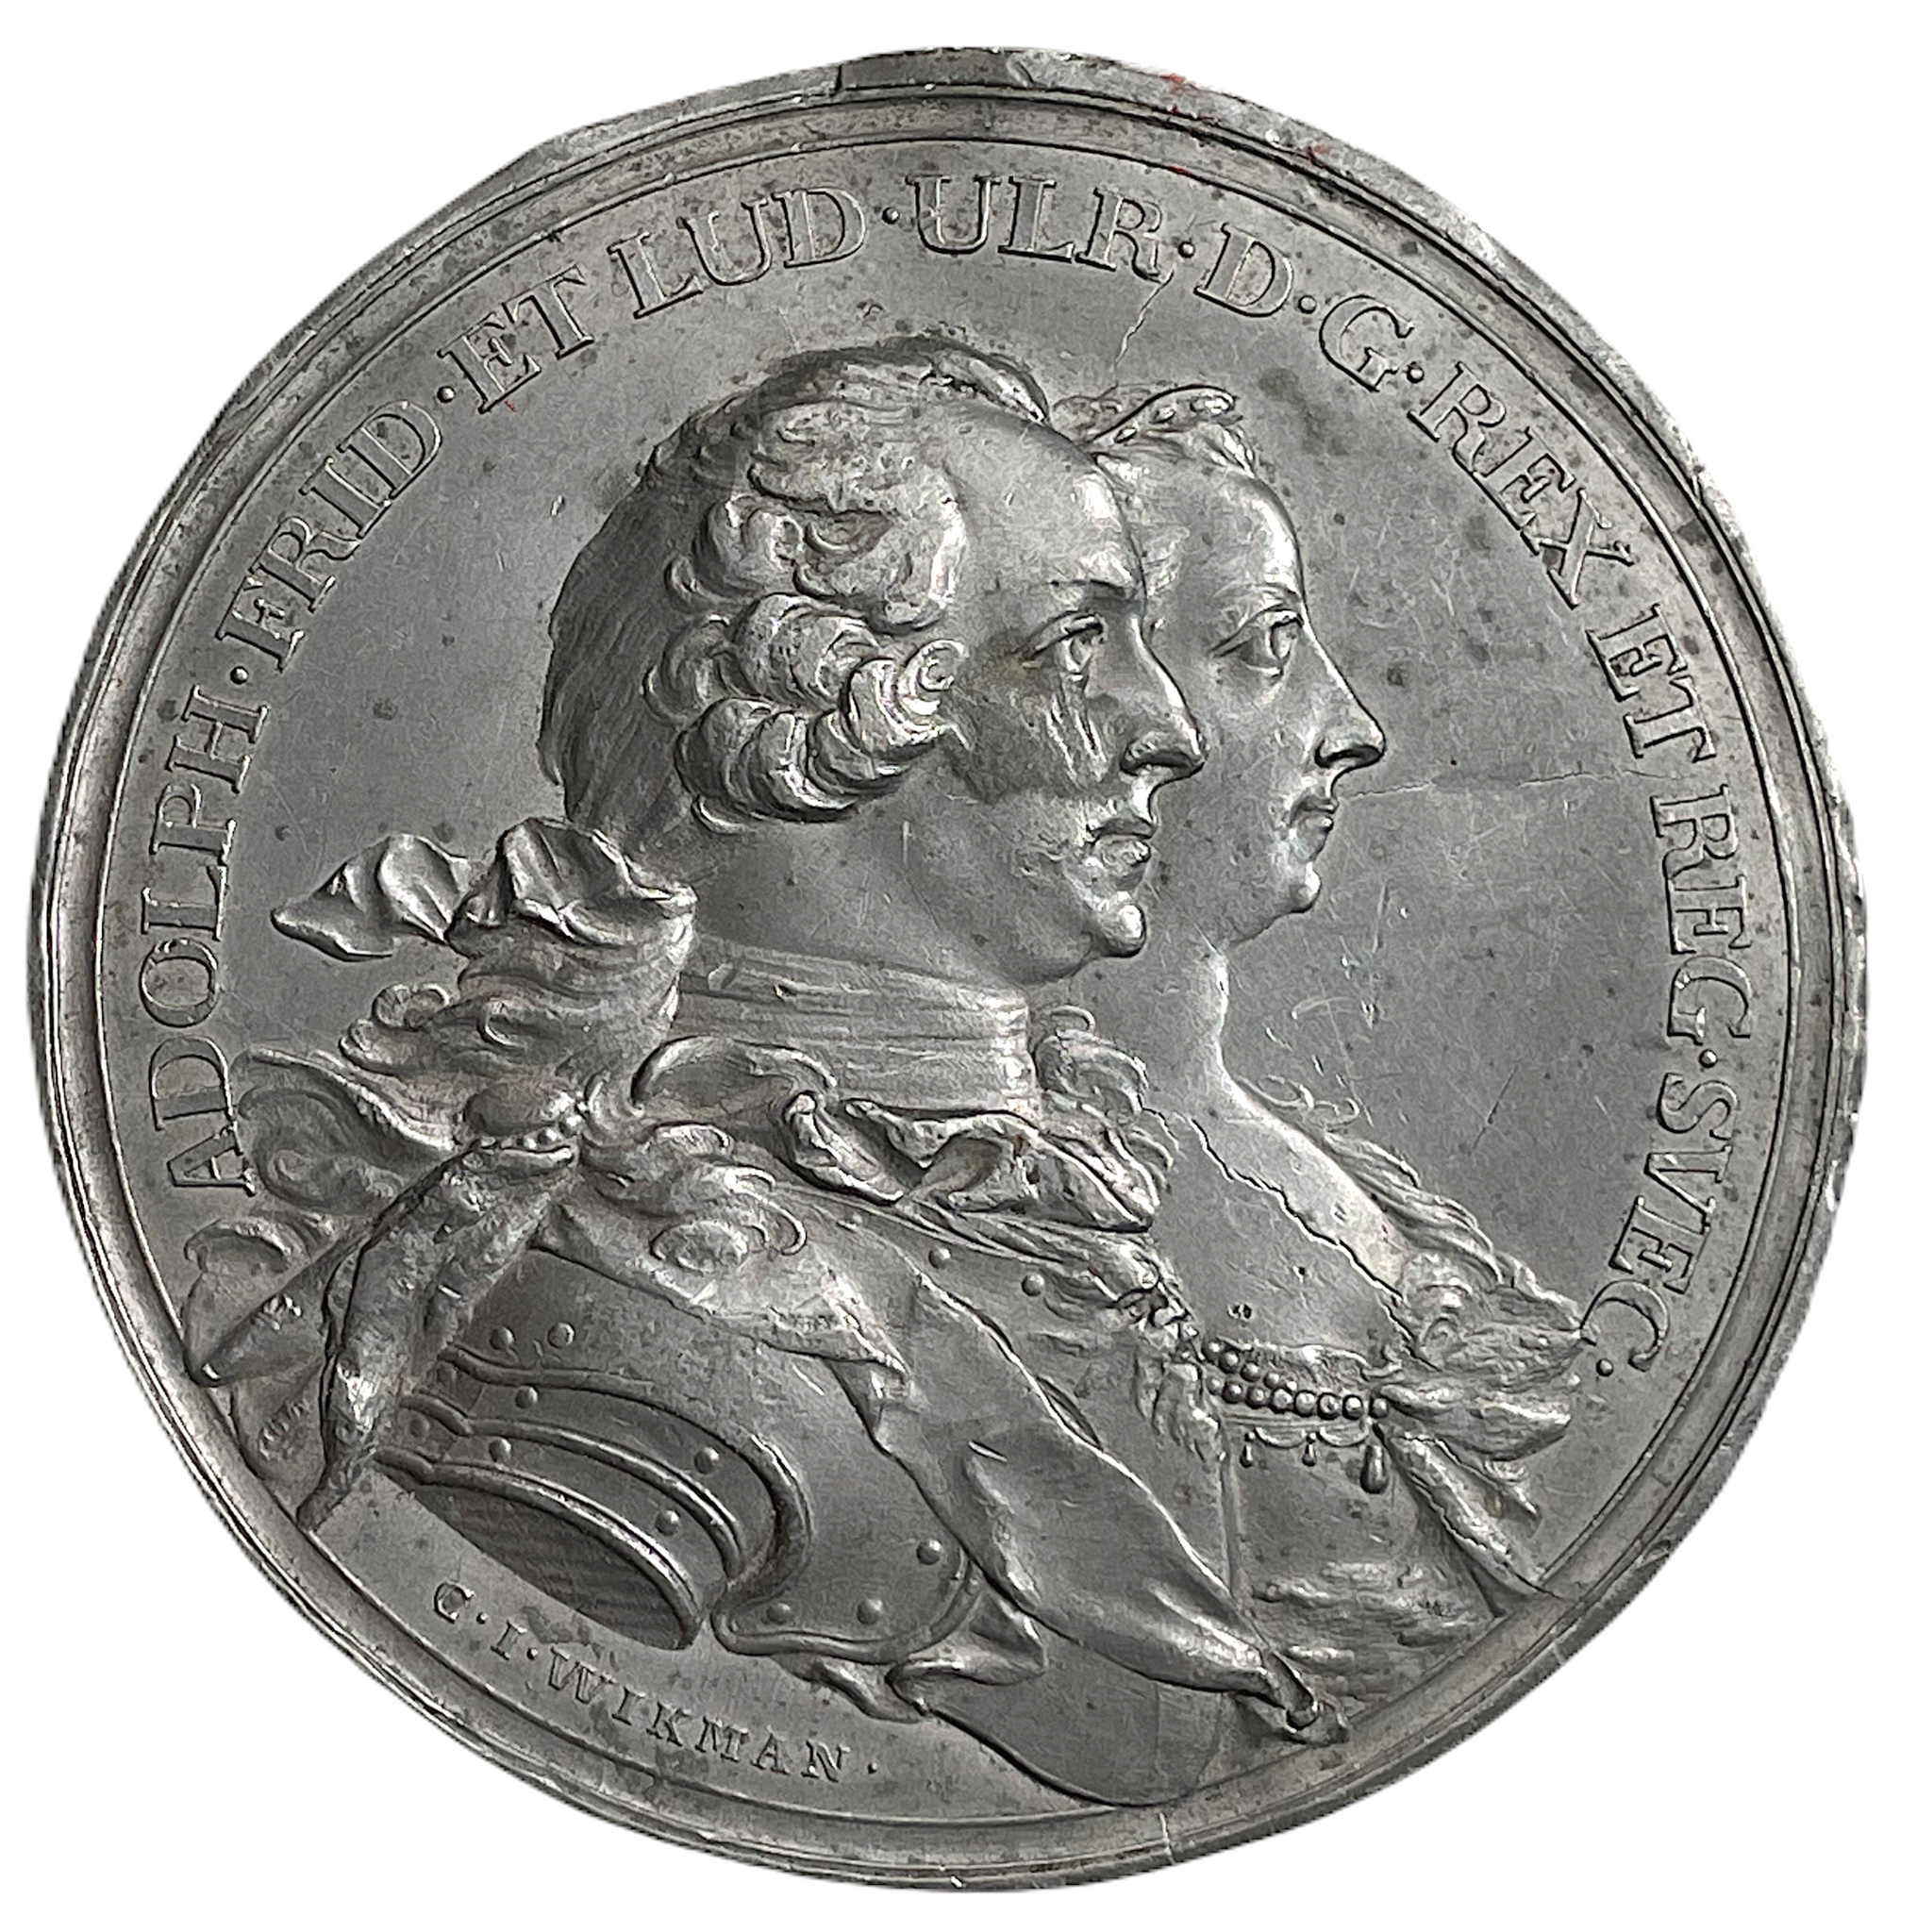 Adolf Fredrik & Lovisa Ulrikas besök i Falu koppargruva 21 juni 1755 - Ensidigt avslag i tenn - XR